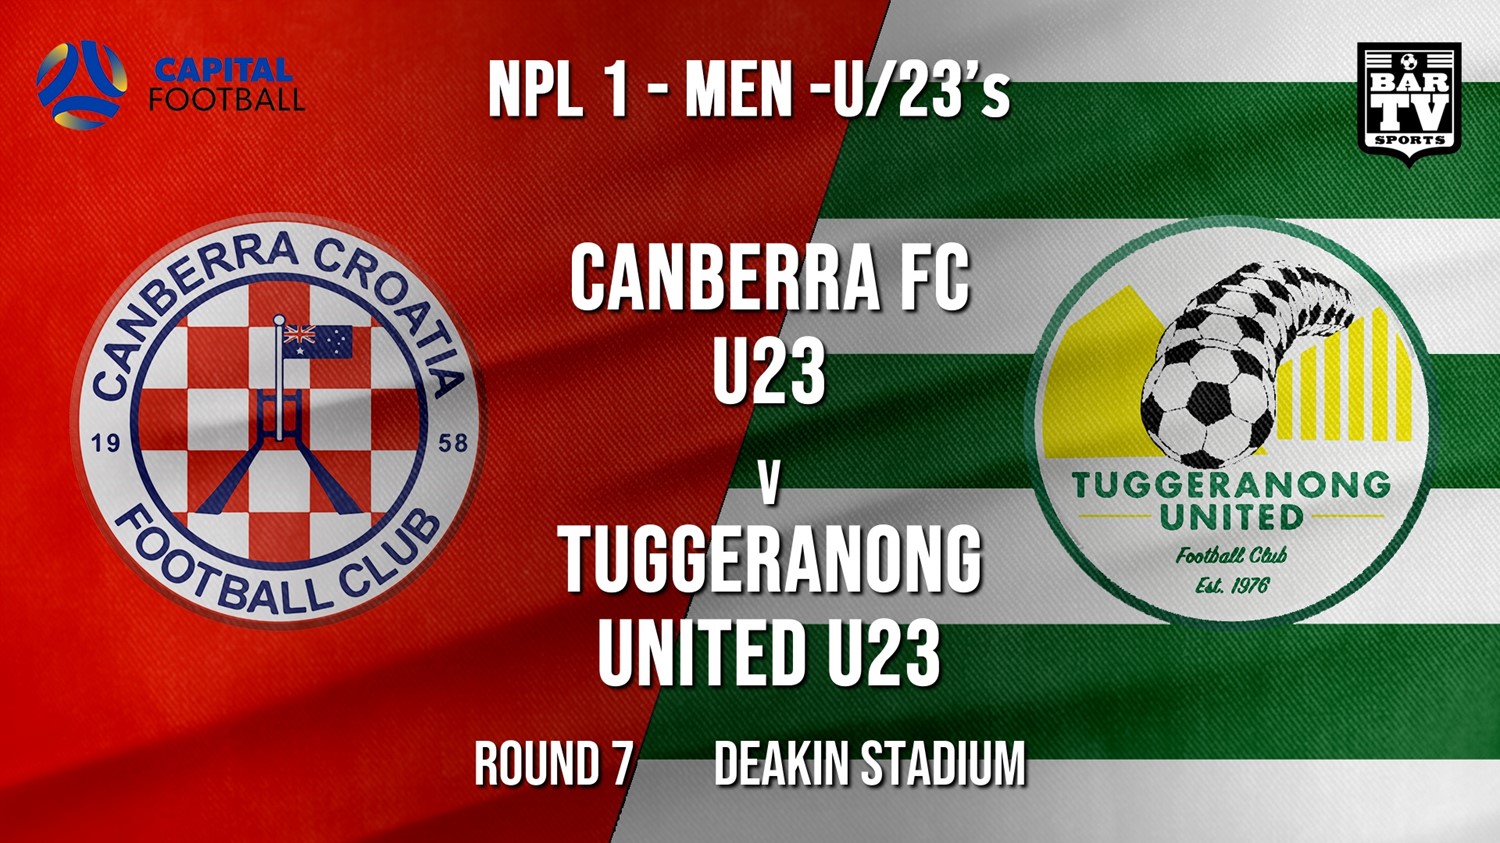 NPL1 Men - U23 - Capital Football  Round 7 - Canberra FC U23 v Tuggeranong United U23 Minigame Slate Image